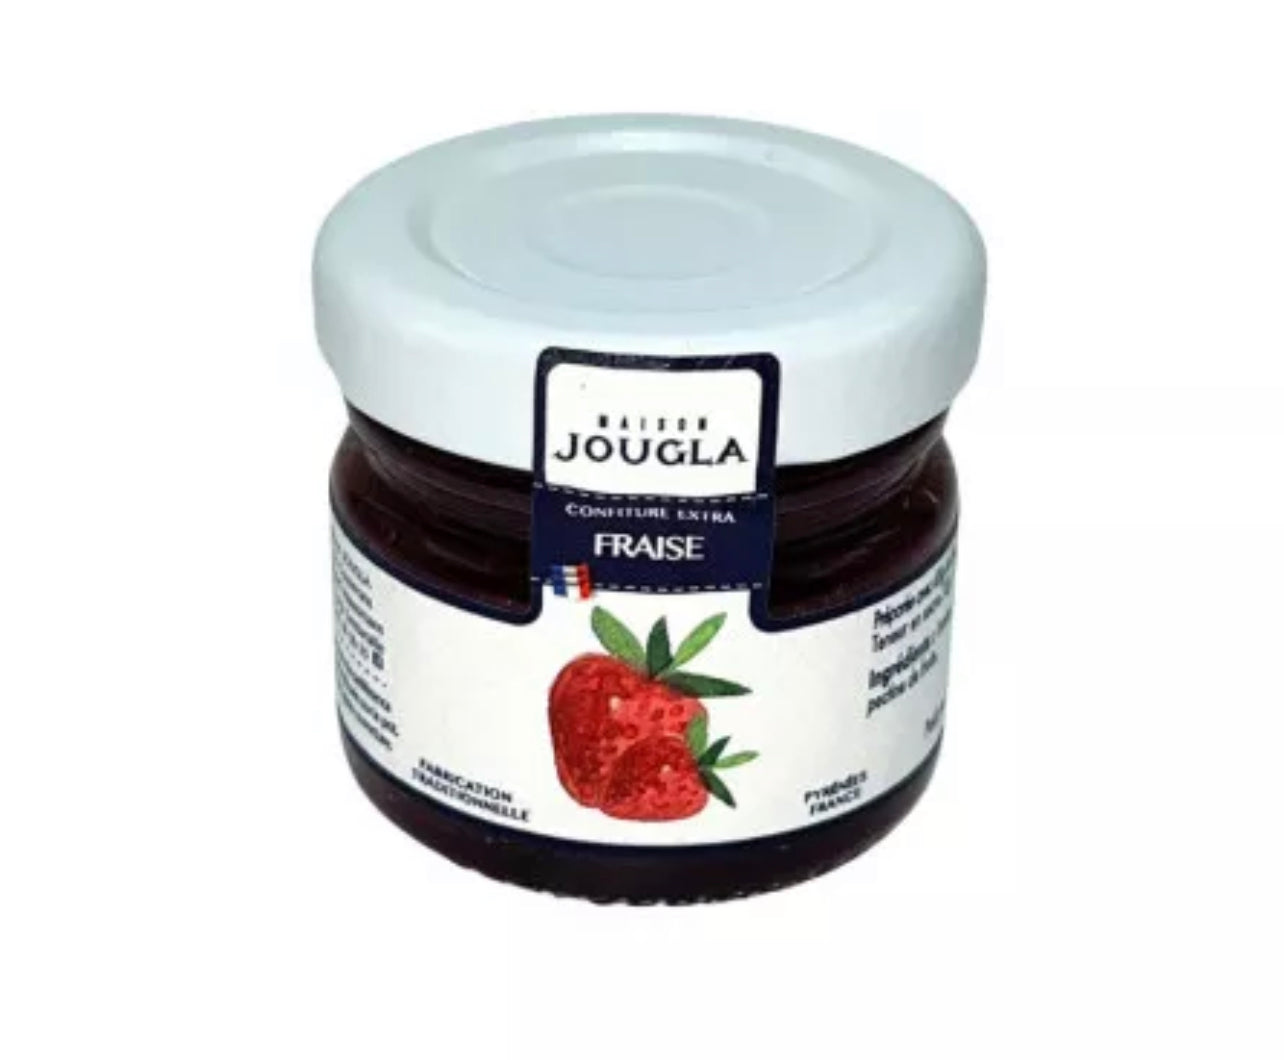 Extra strawberry jam - individual jar 72x28g